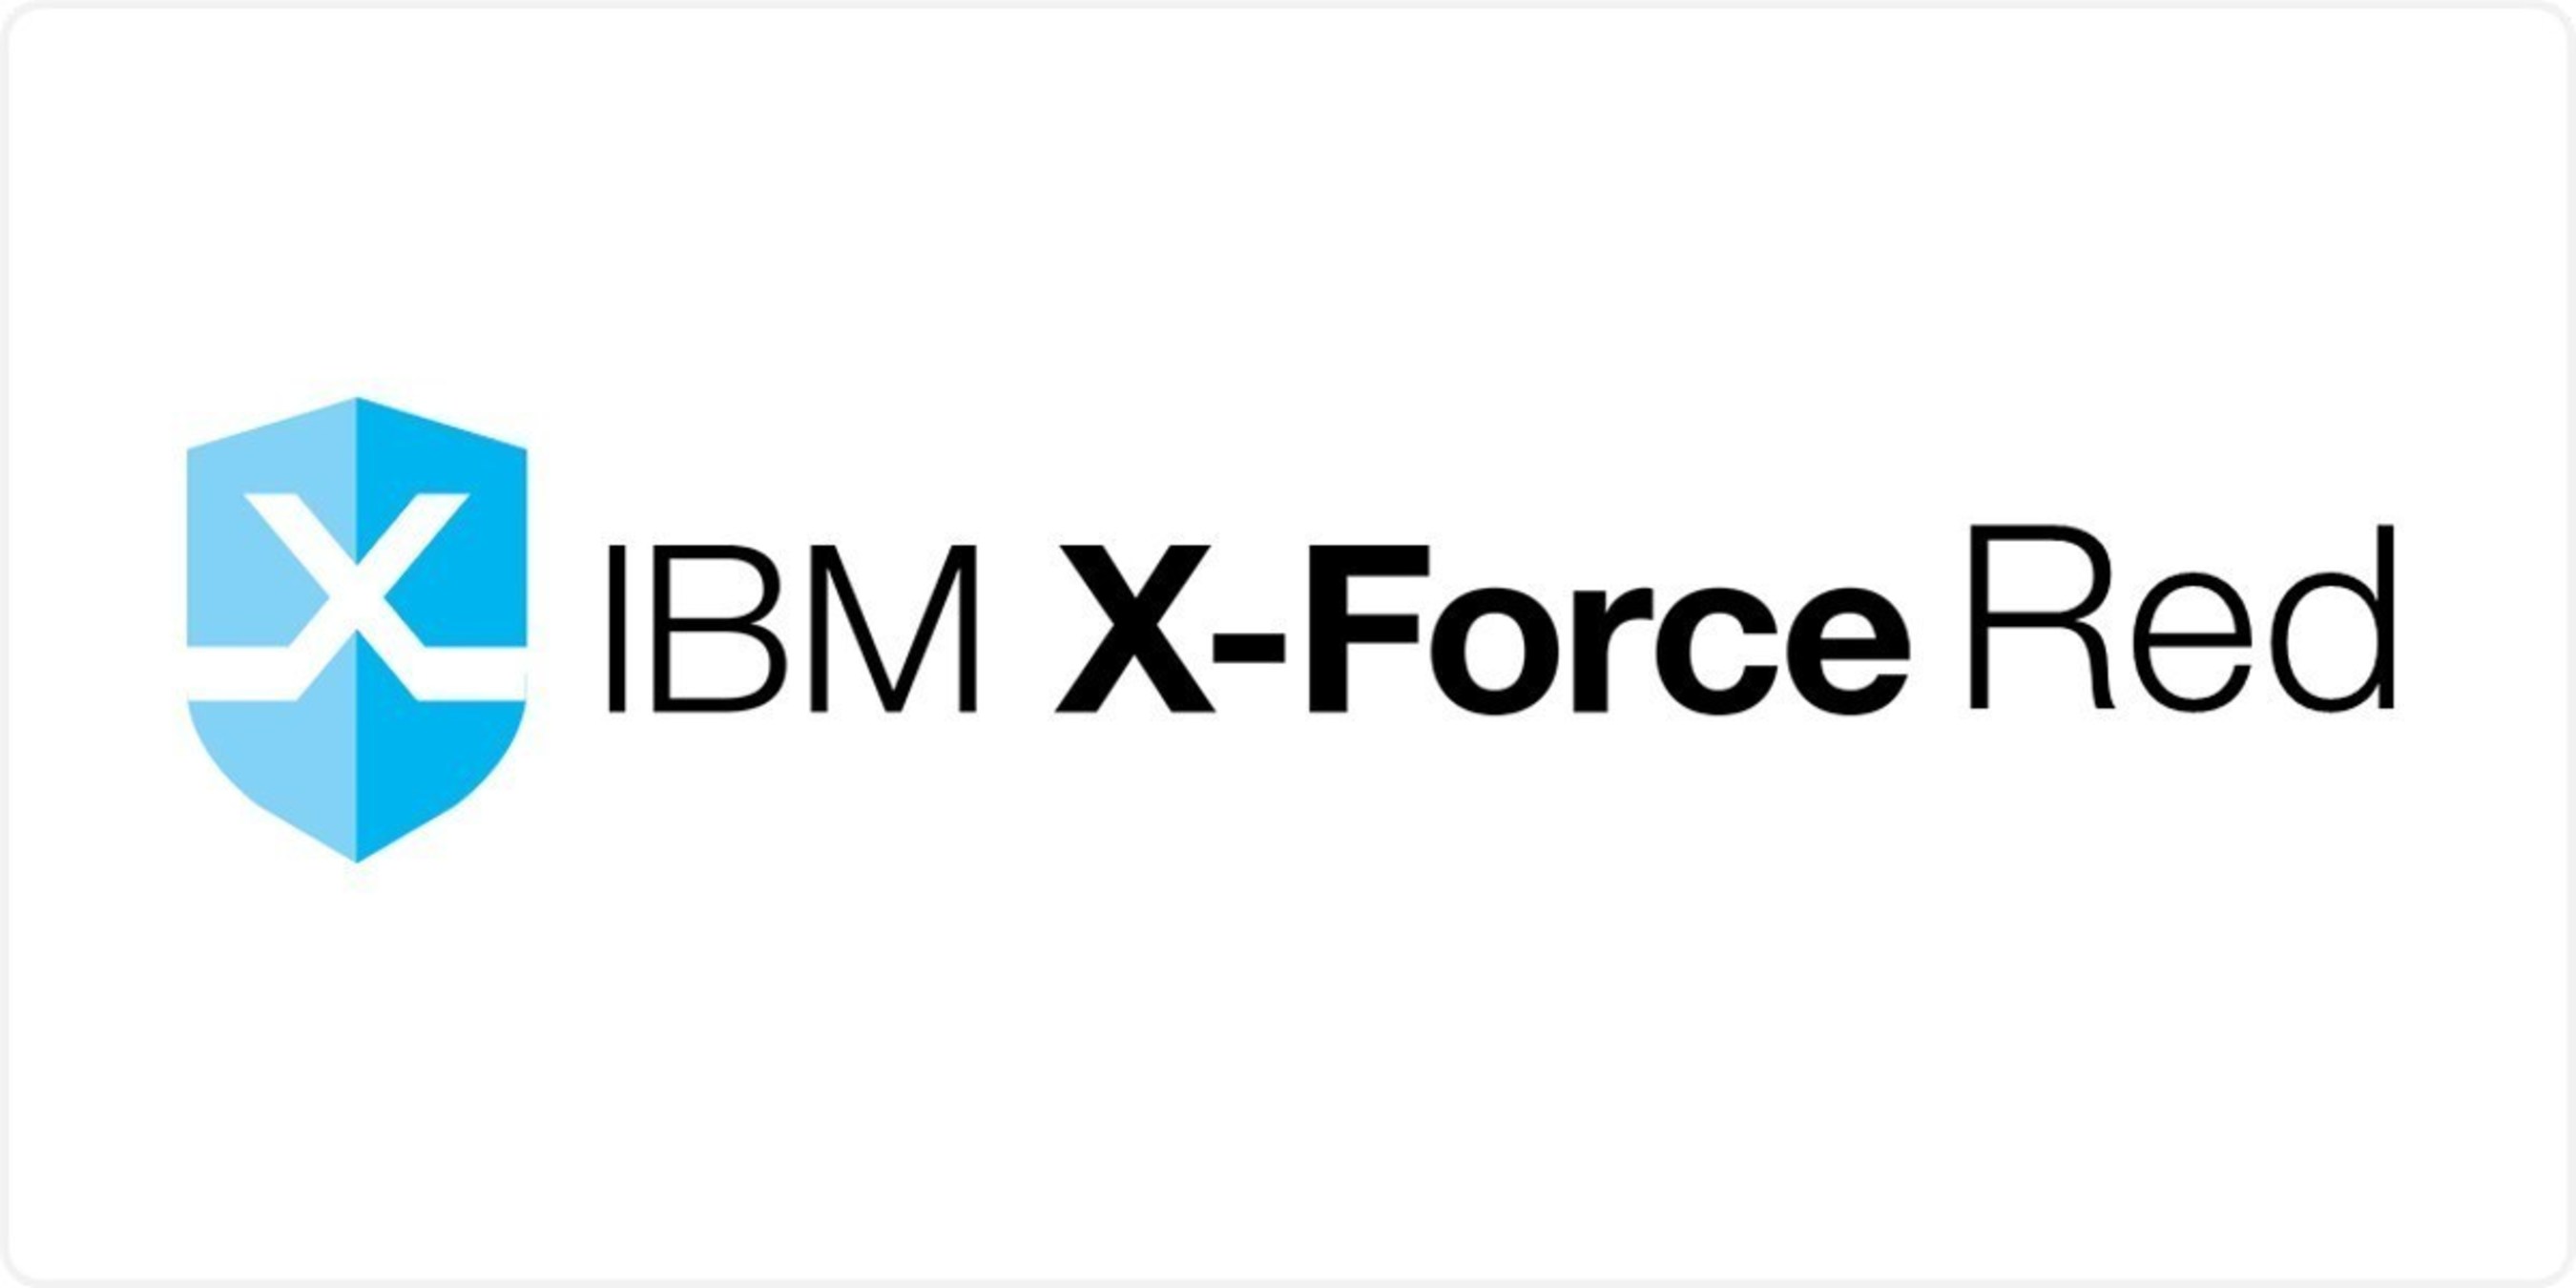 IBM X-Force Red